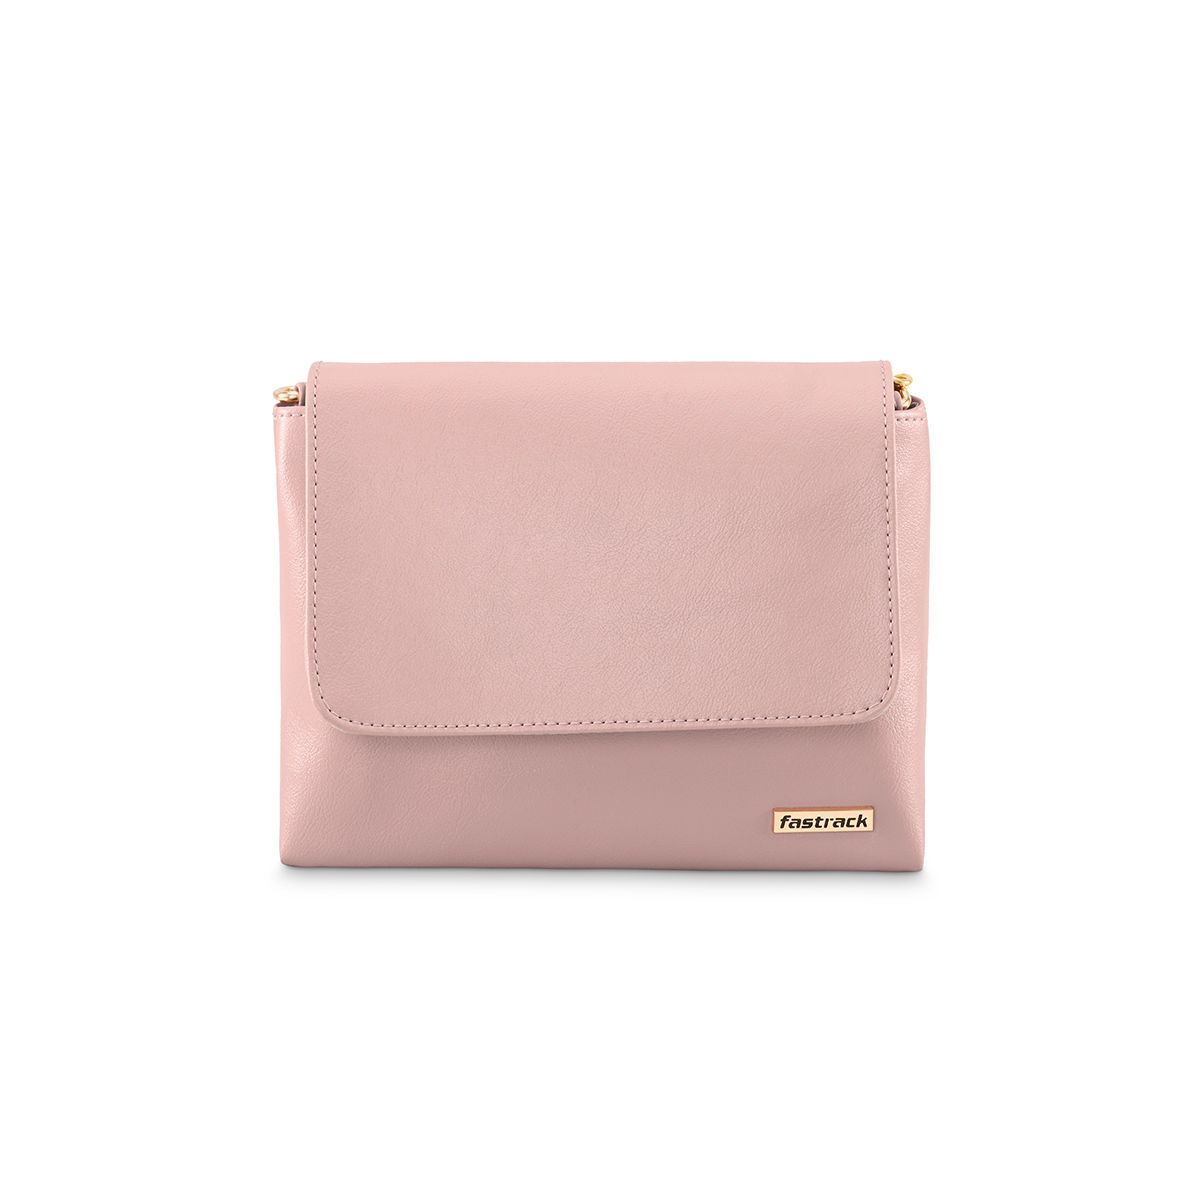 Buy Women's Style Handbag 8 Inch Online at Best Prices